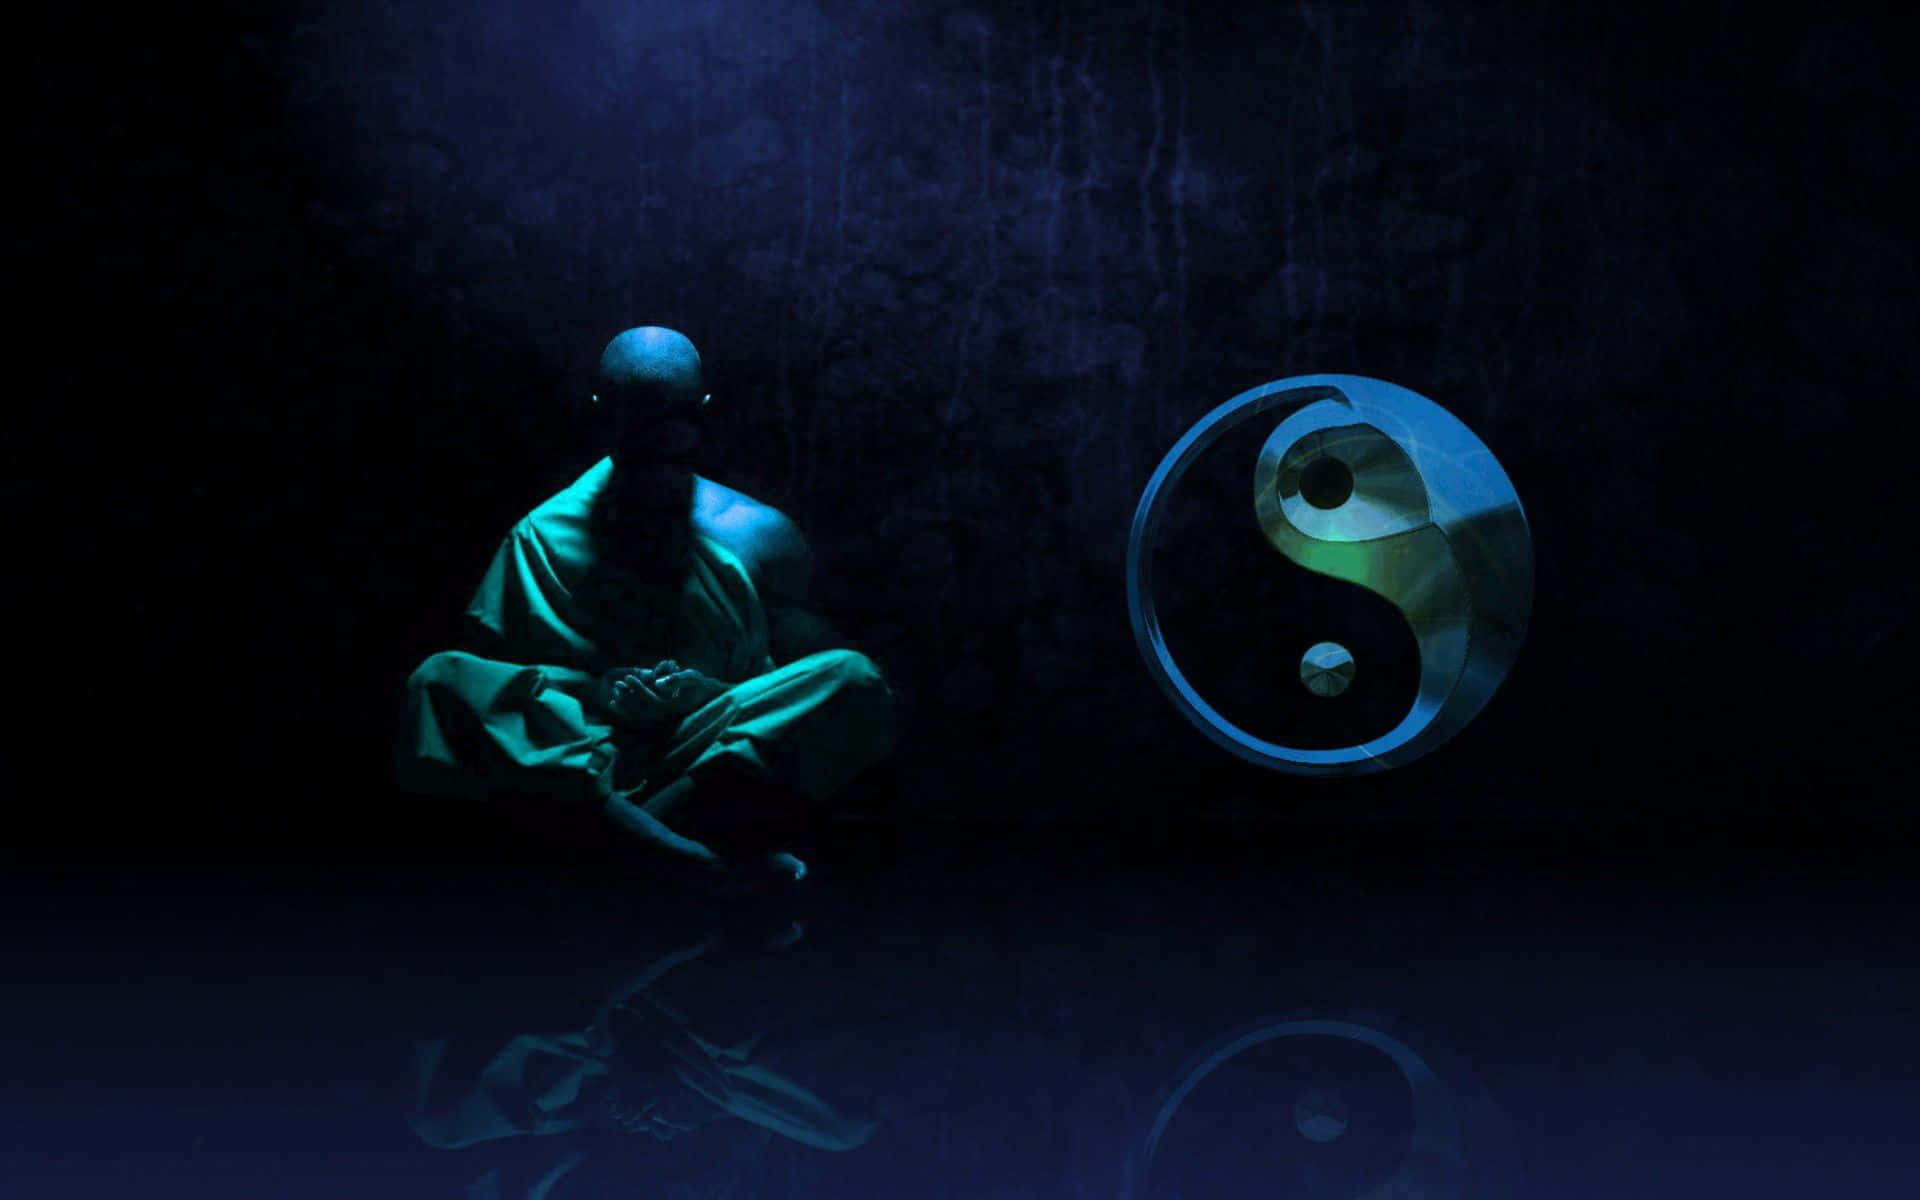 Monk Meditation Ying Yang Glowing Ball Picture